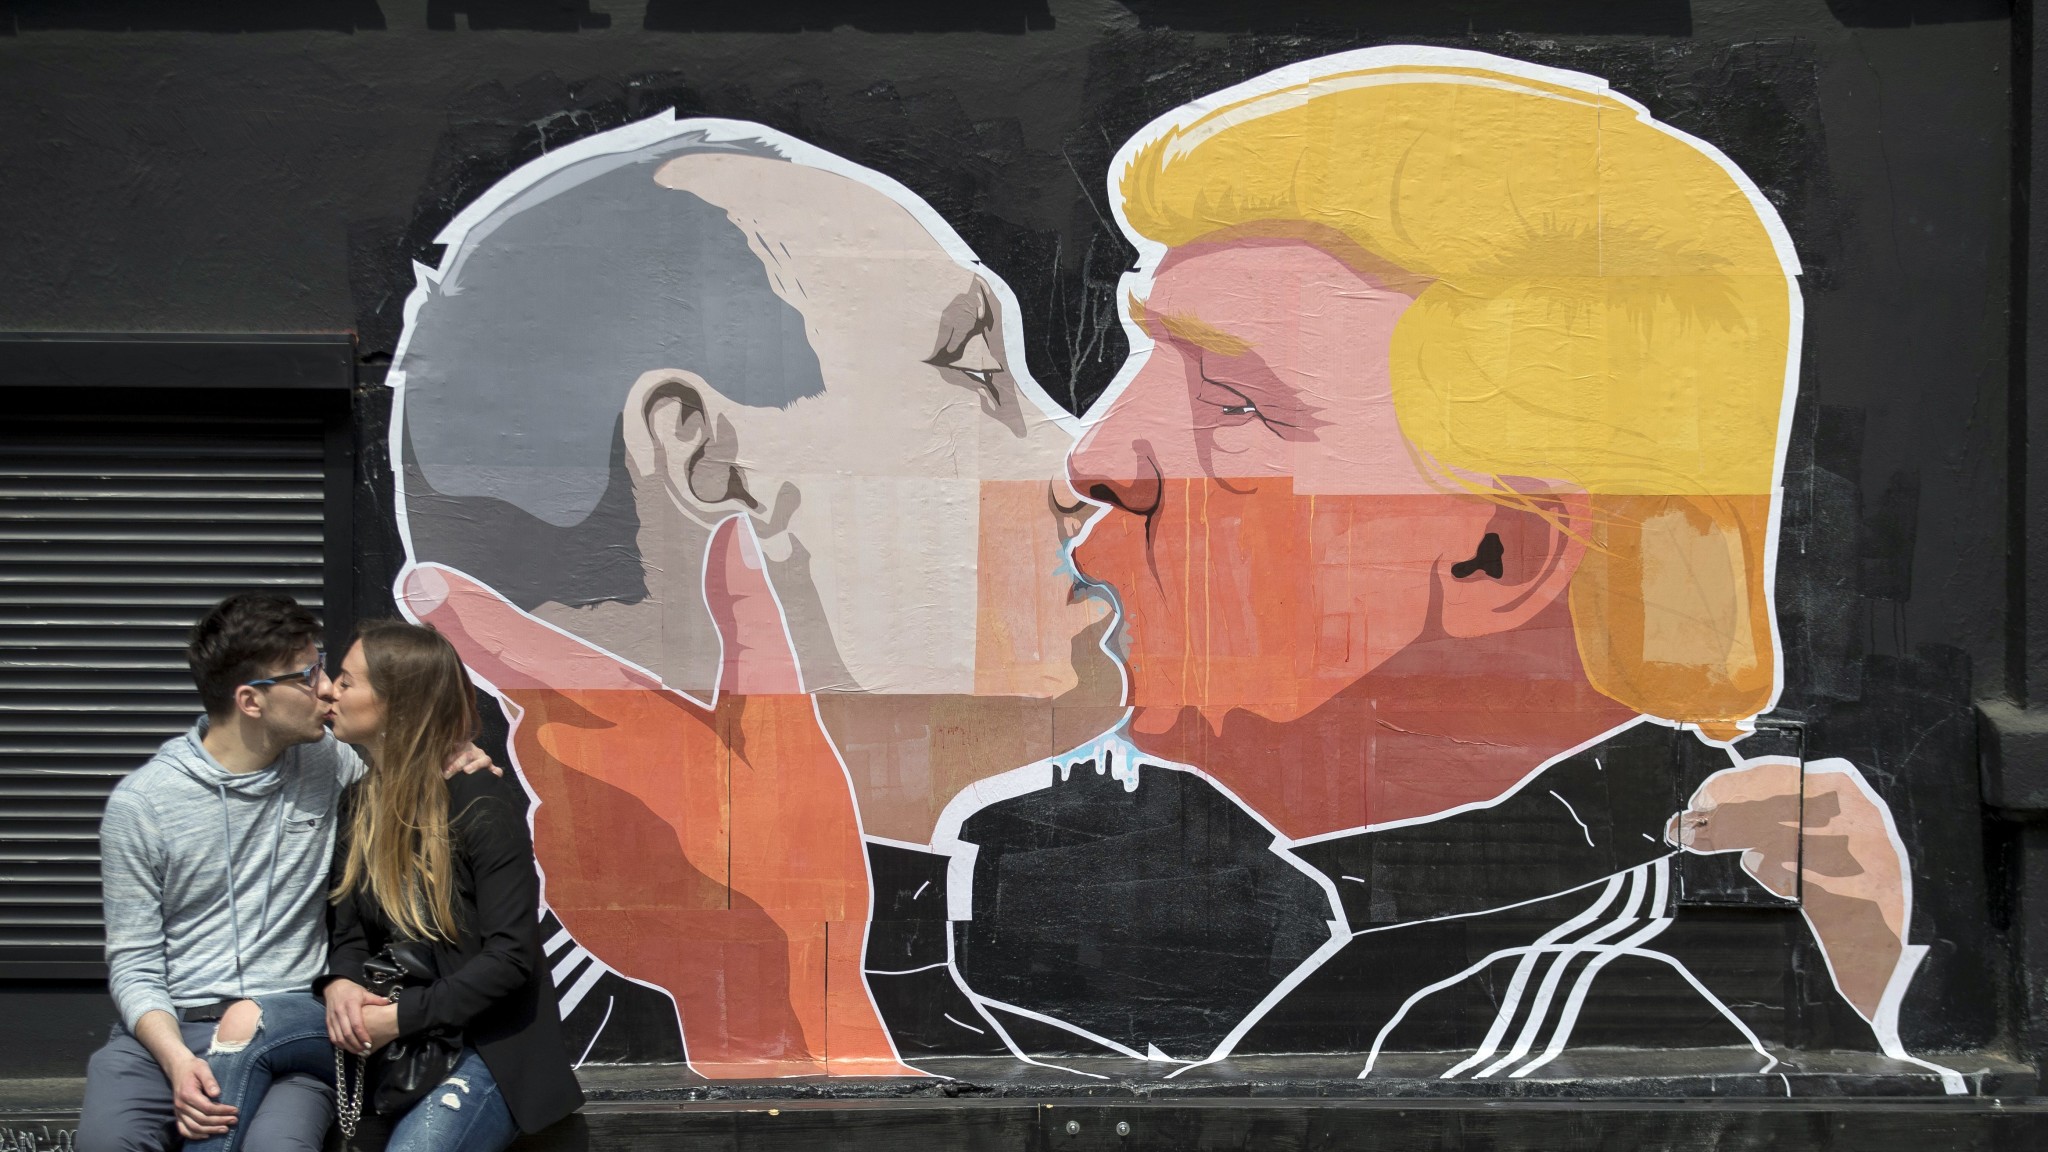 A mural of Donald Trump kissing Vladimir Putin by artist Mindaugas Bonanu in Vilnius, Lithuania (Image: quartz.com)